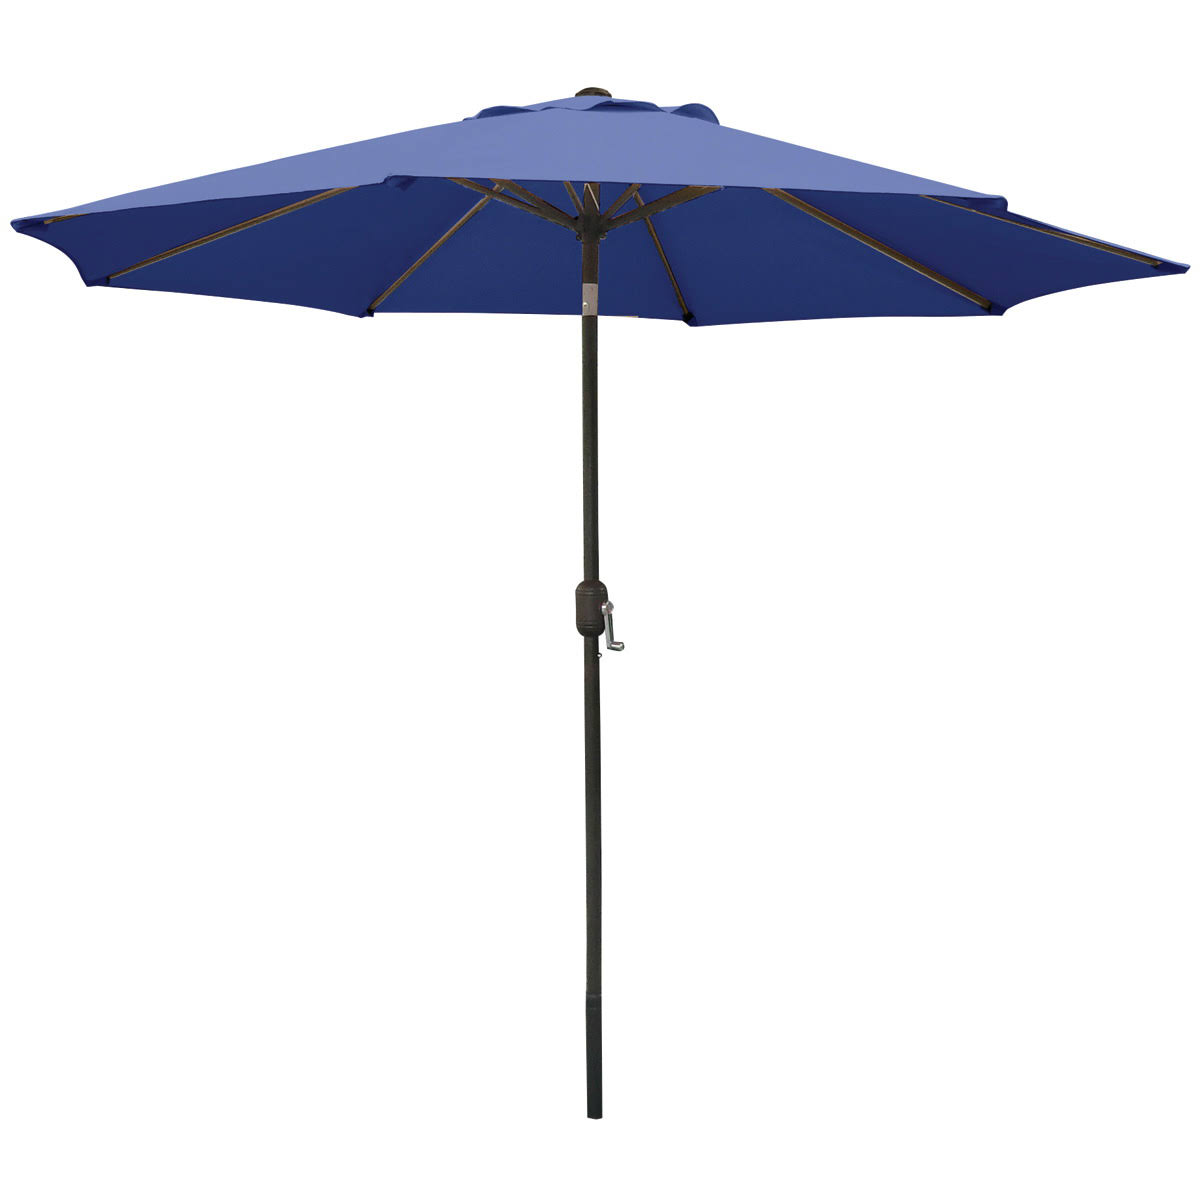 Bond Manufacturing Crank Style Umbrella - Blue, 9'